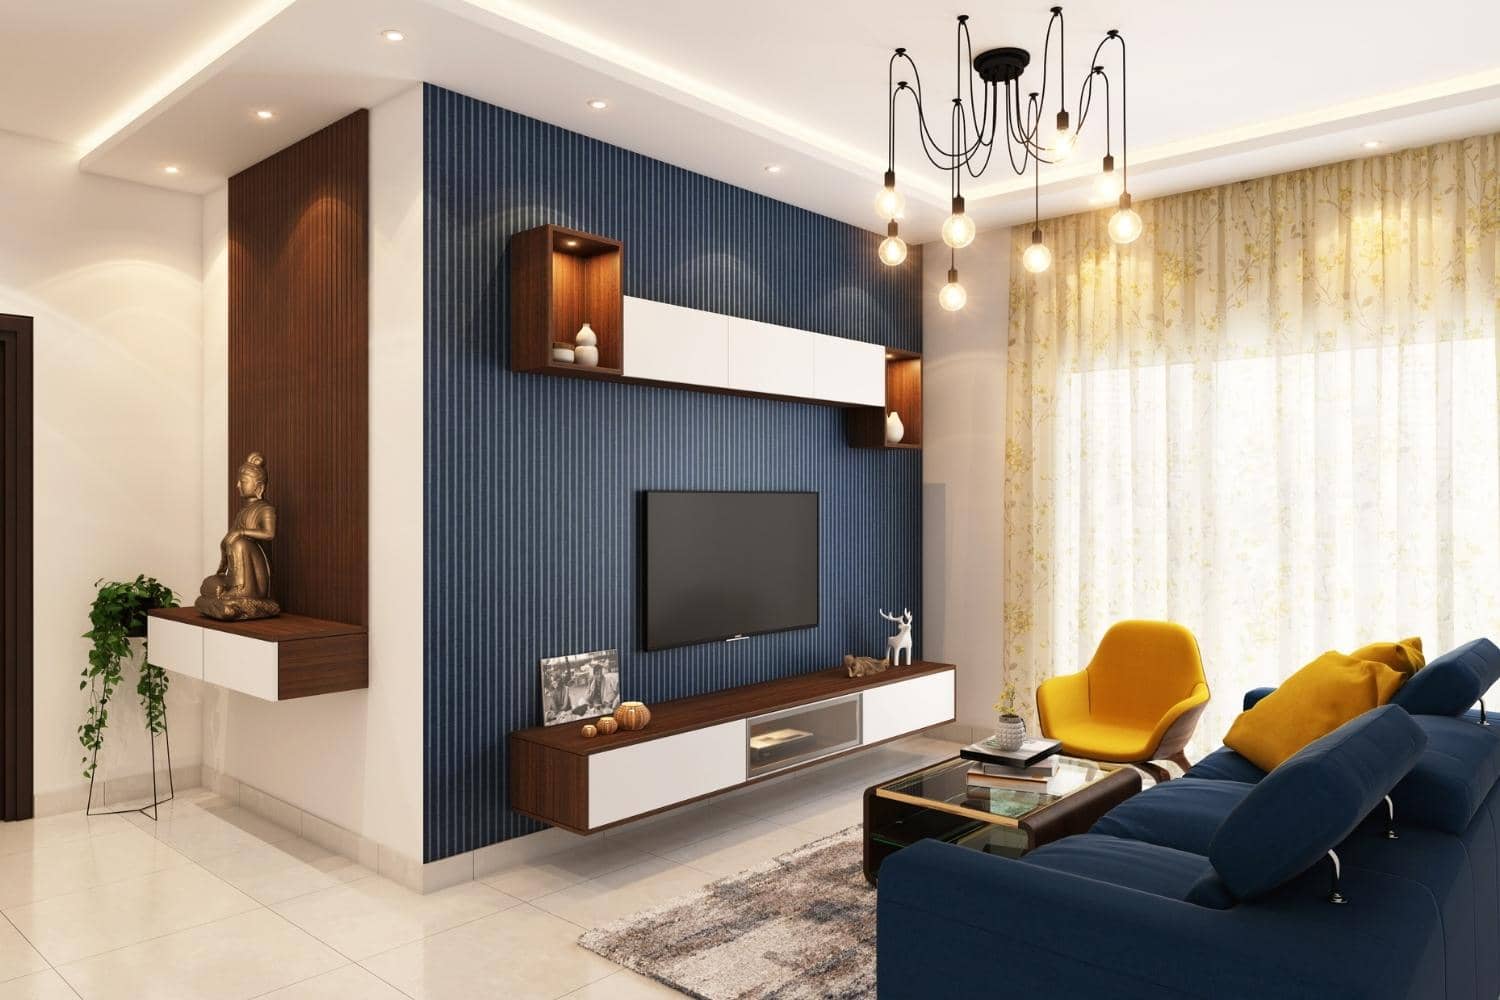 Living room light fixture design